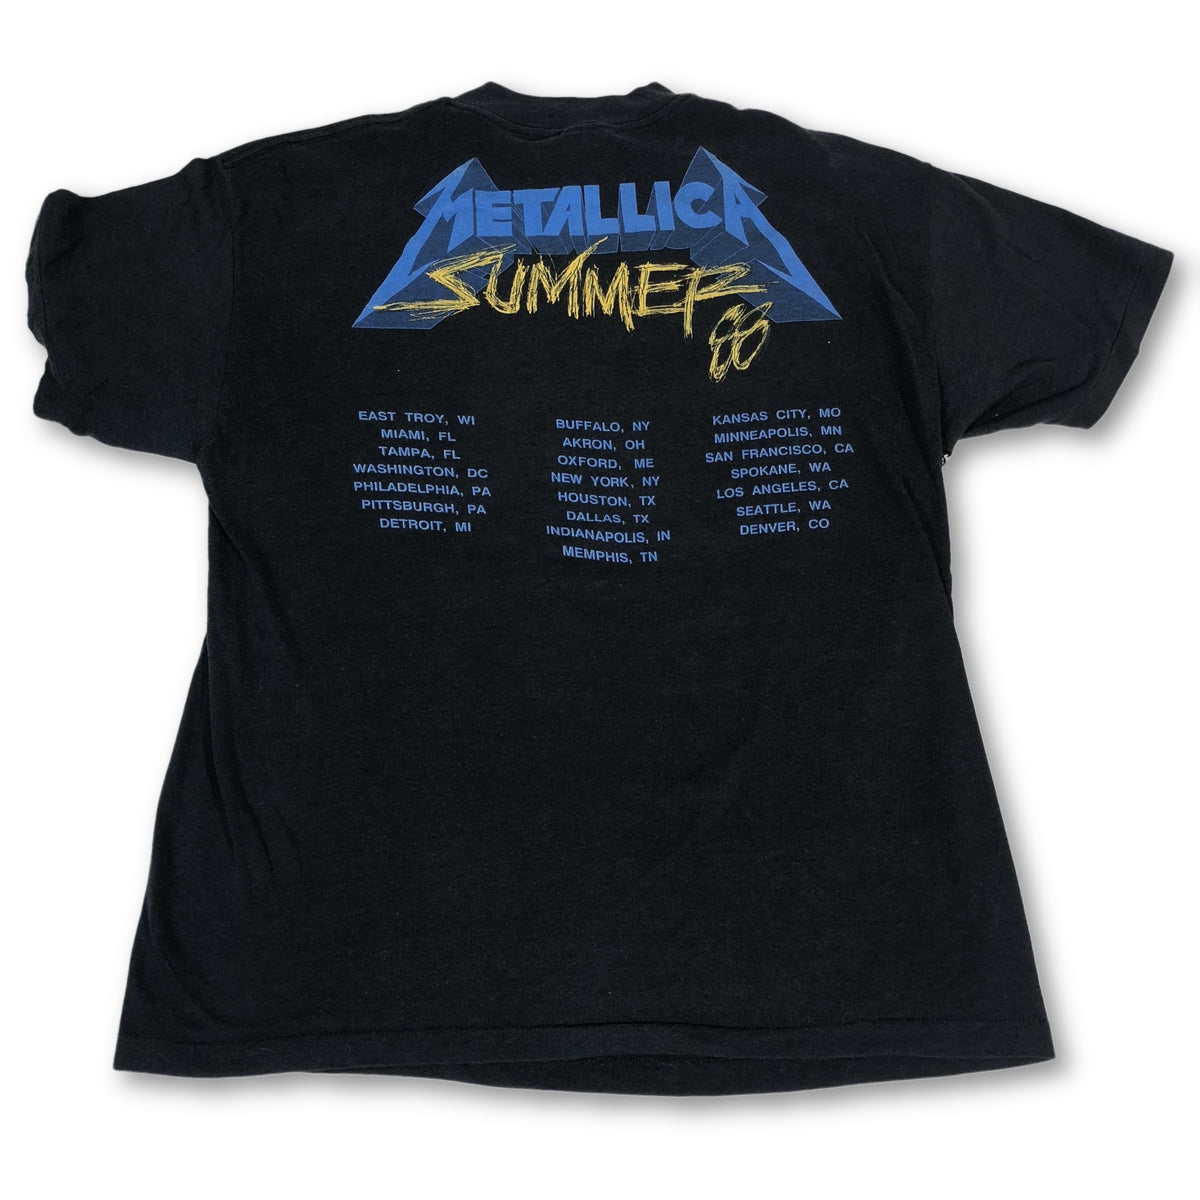 Vintage Metallica &quot;Damaged Justice&quot; Summer &#39;88 Tour T-Shirt - jointcustodydc